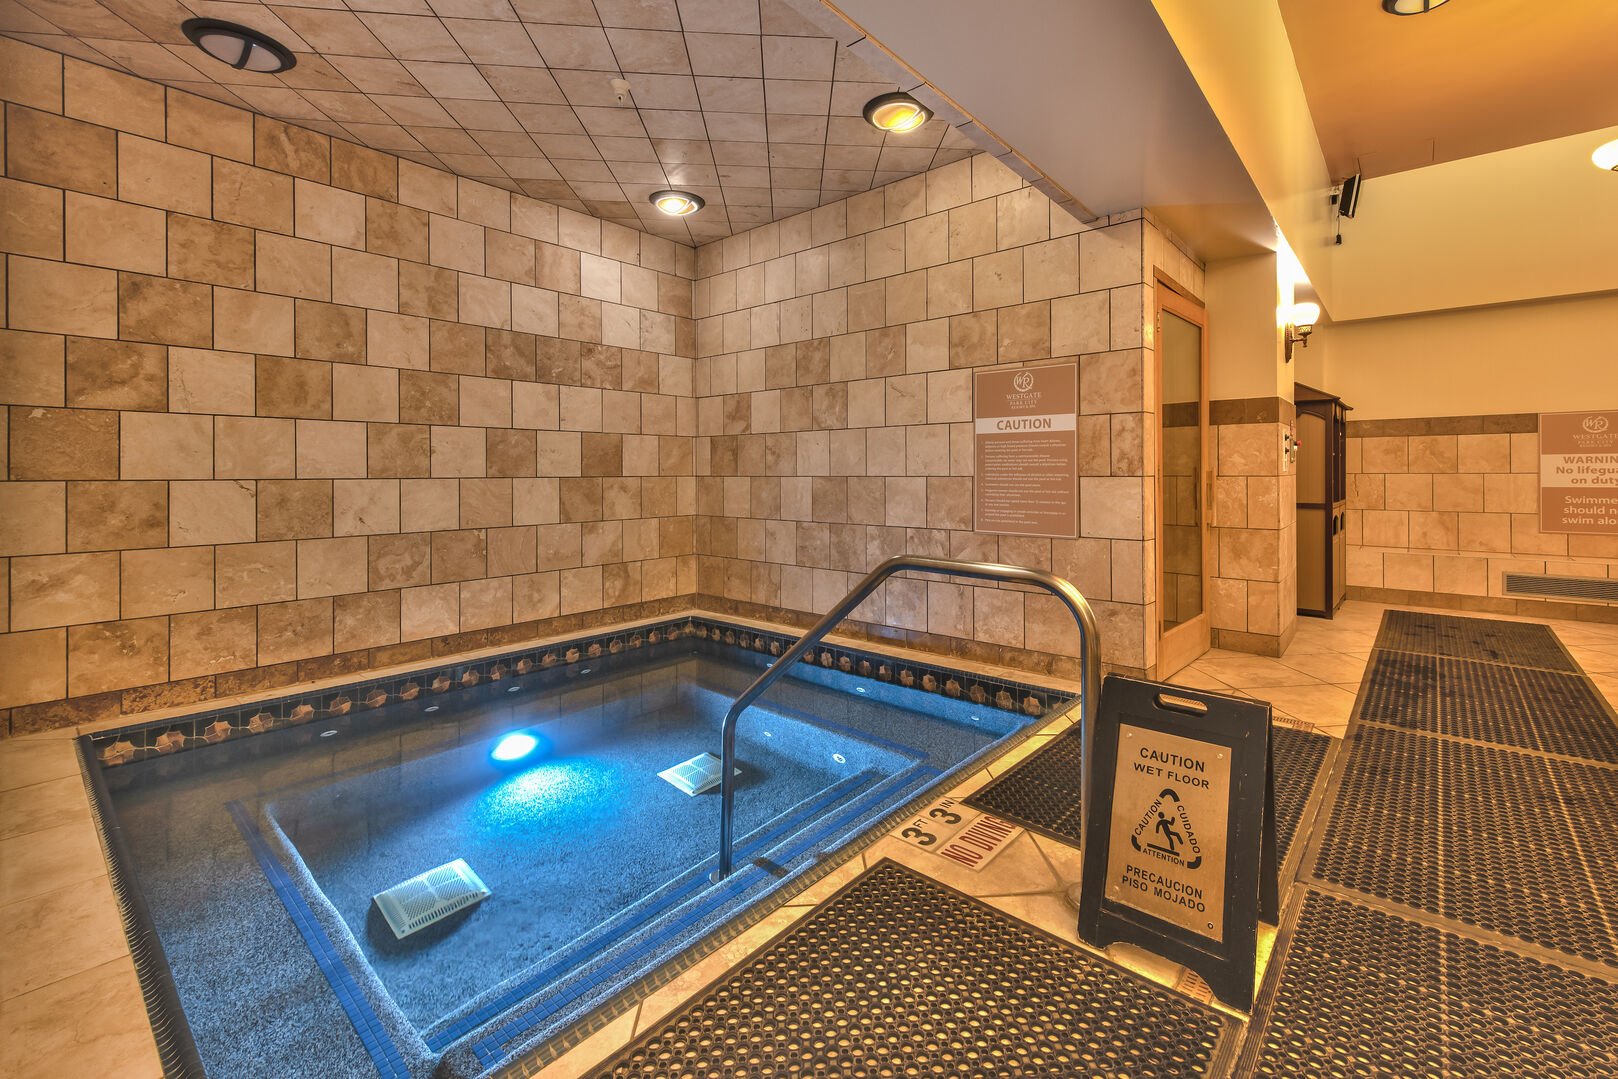 Westgate Resort spa hot tub.